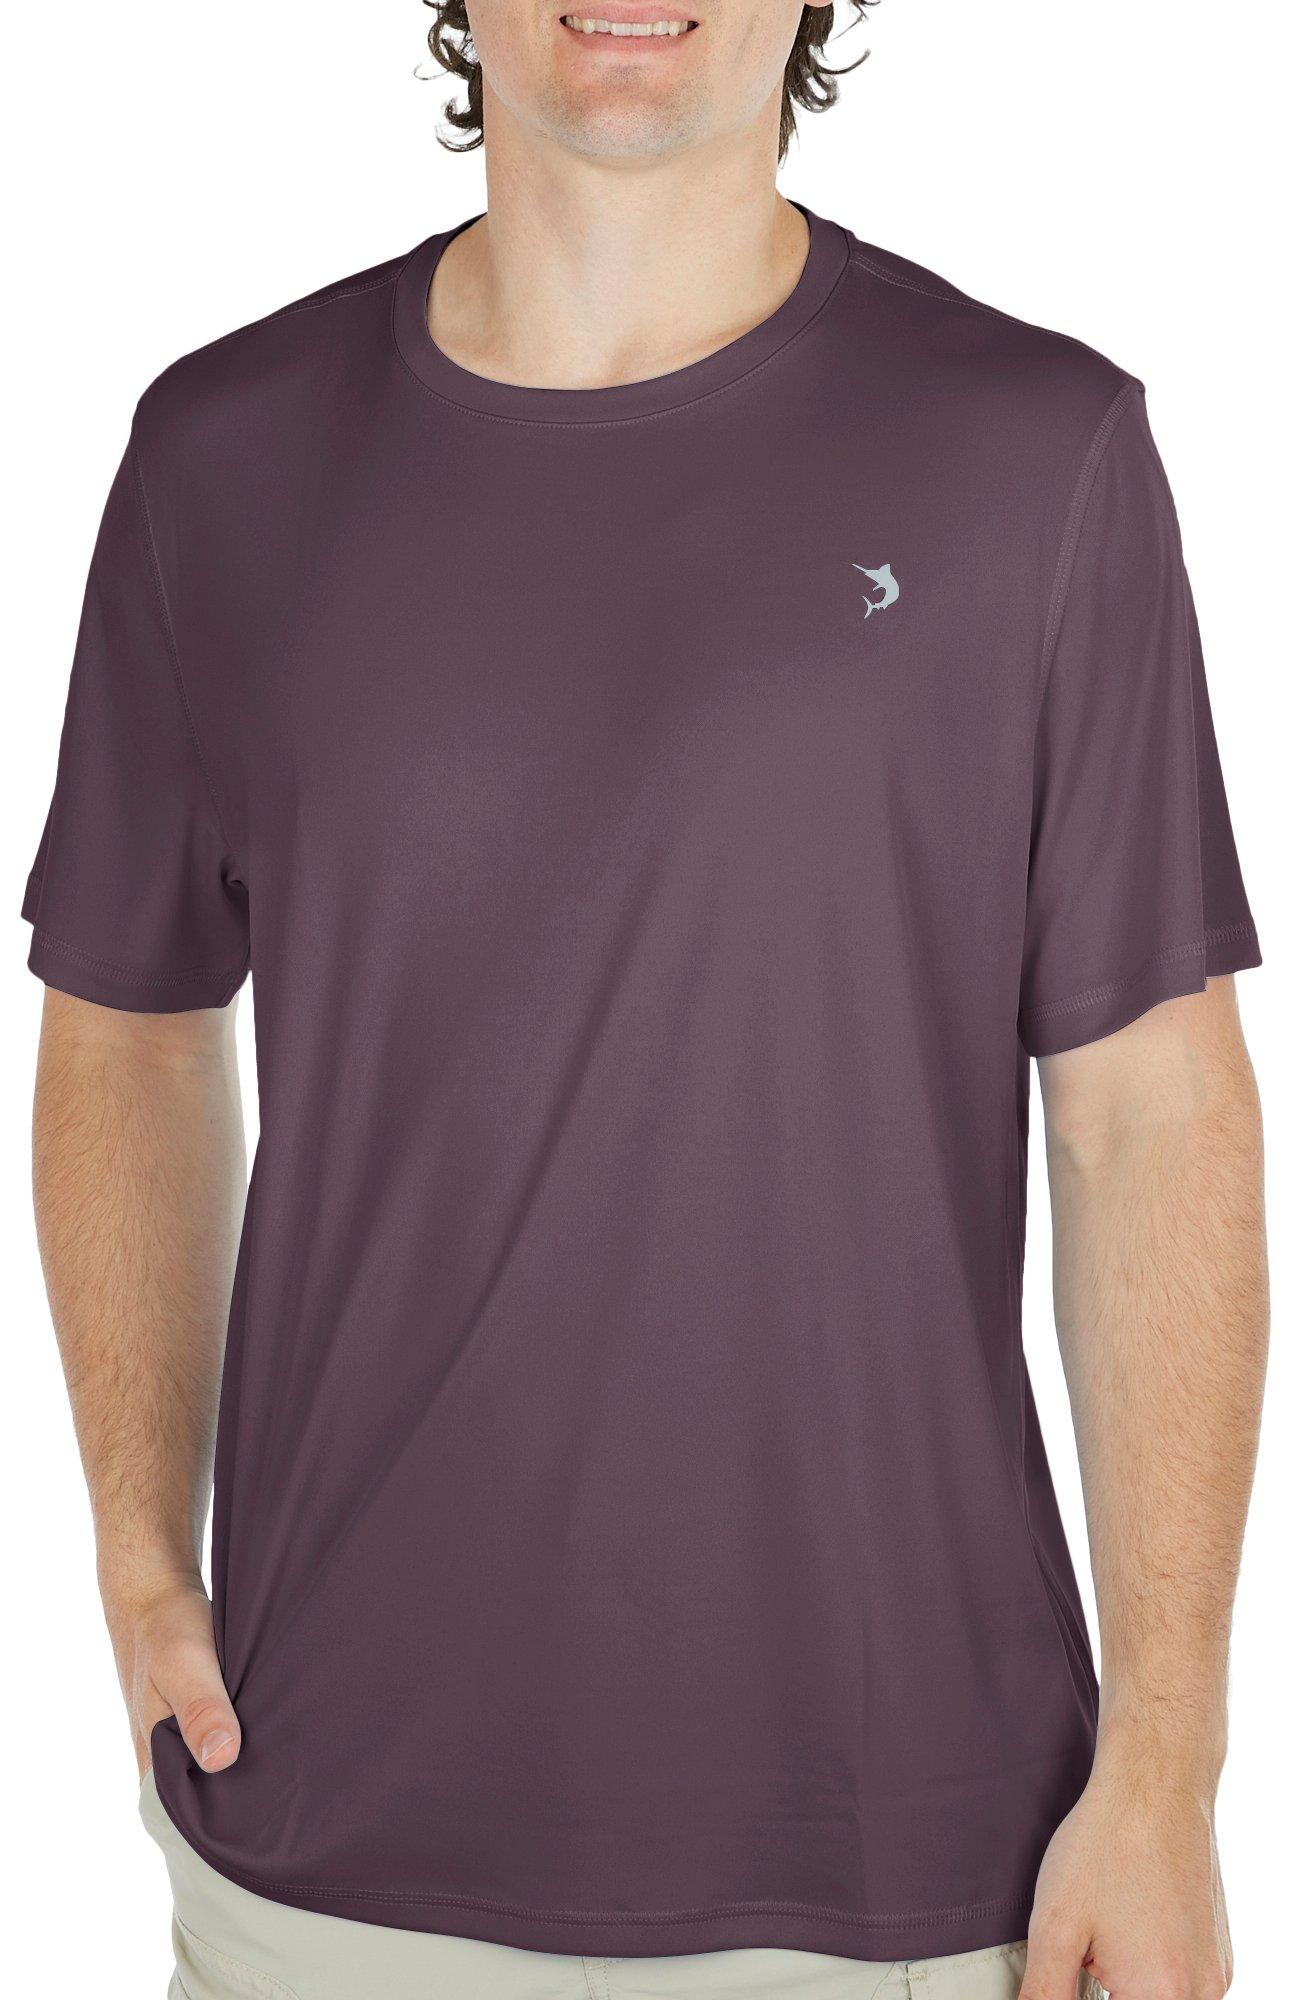 Reel Legends Mens Solid Performance Reel-Tec T-Shirt - Grape Purple - Small